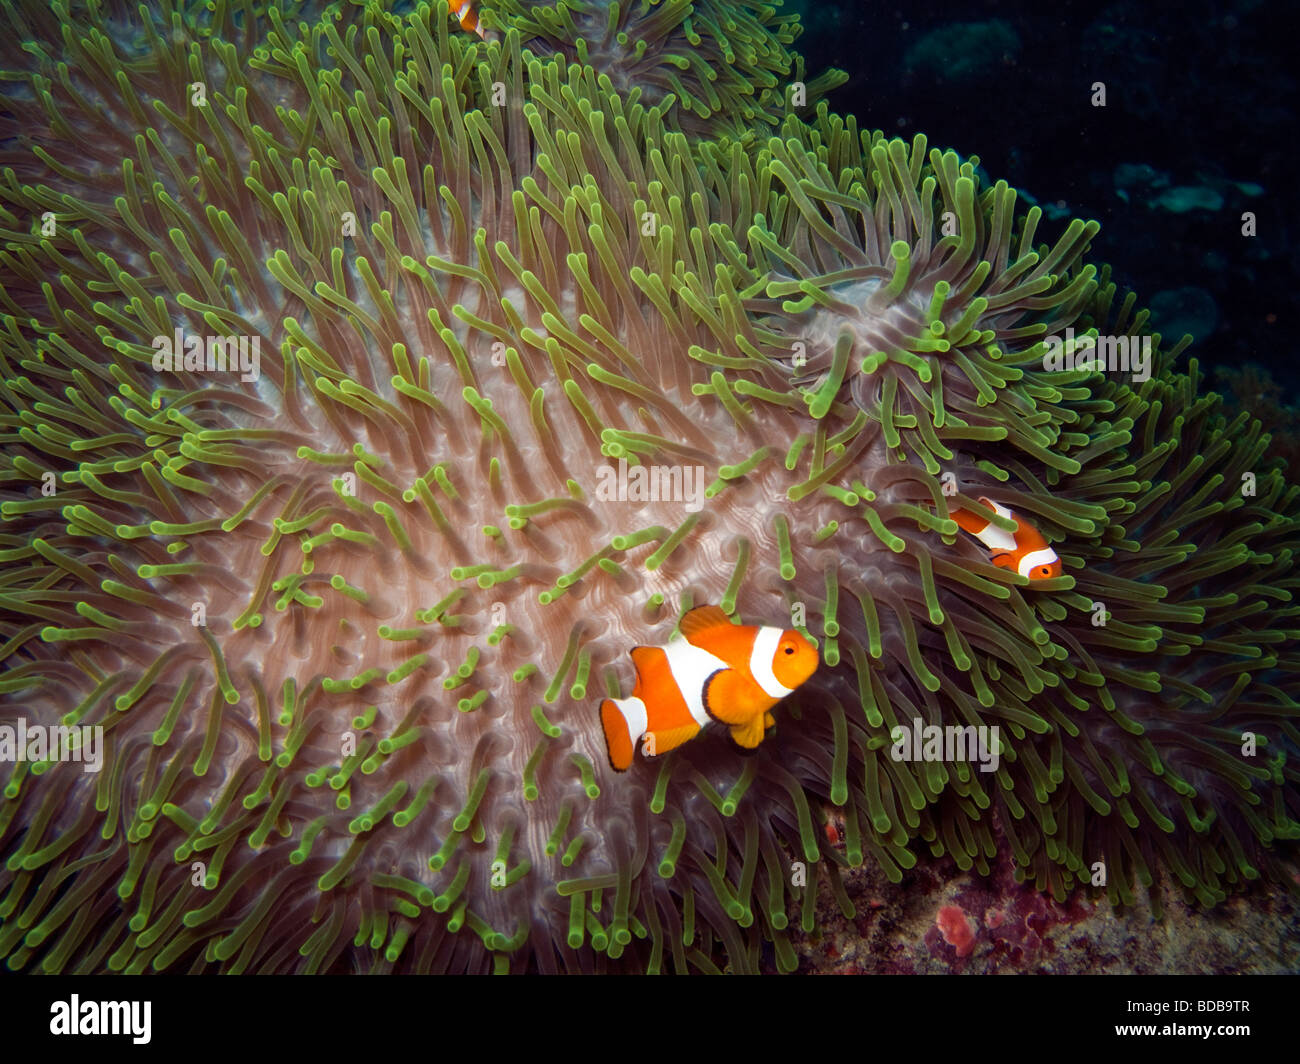 Indonesia Sulawesi Wakatobi marine Park false clown anemonefish Amphiprion ocellaris Gigantic sea anemone Stichodactyla gigantea Stock Photo